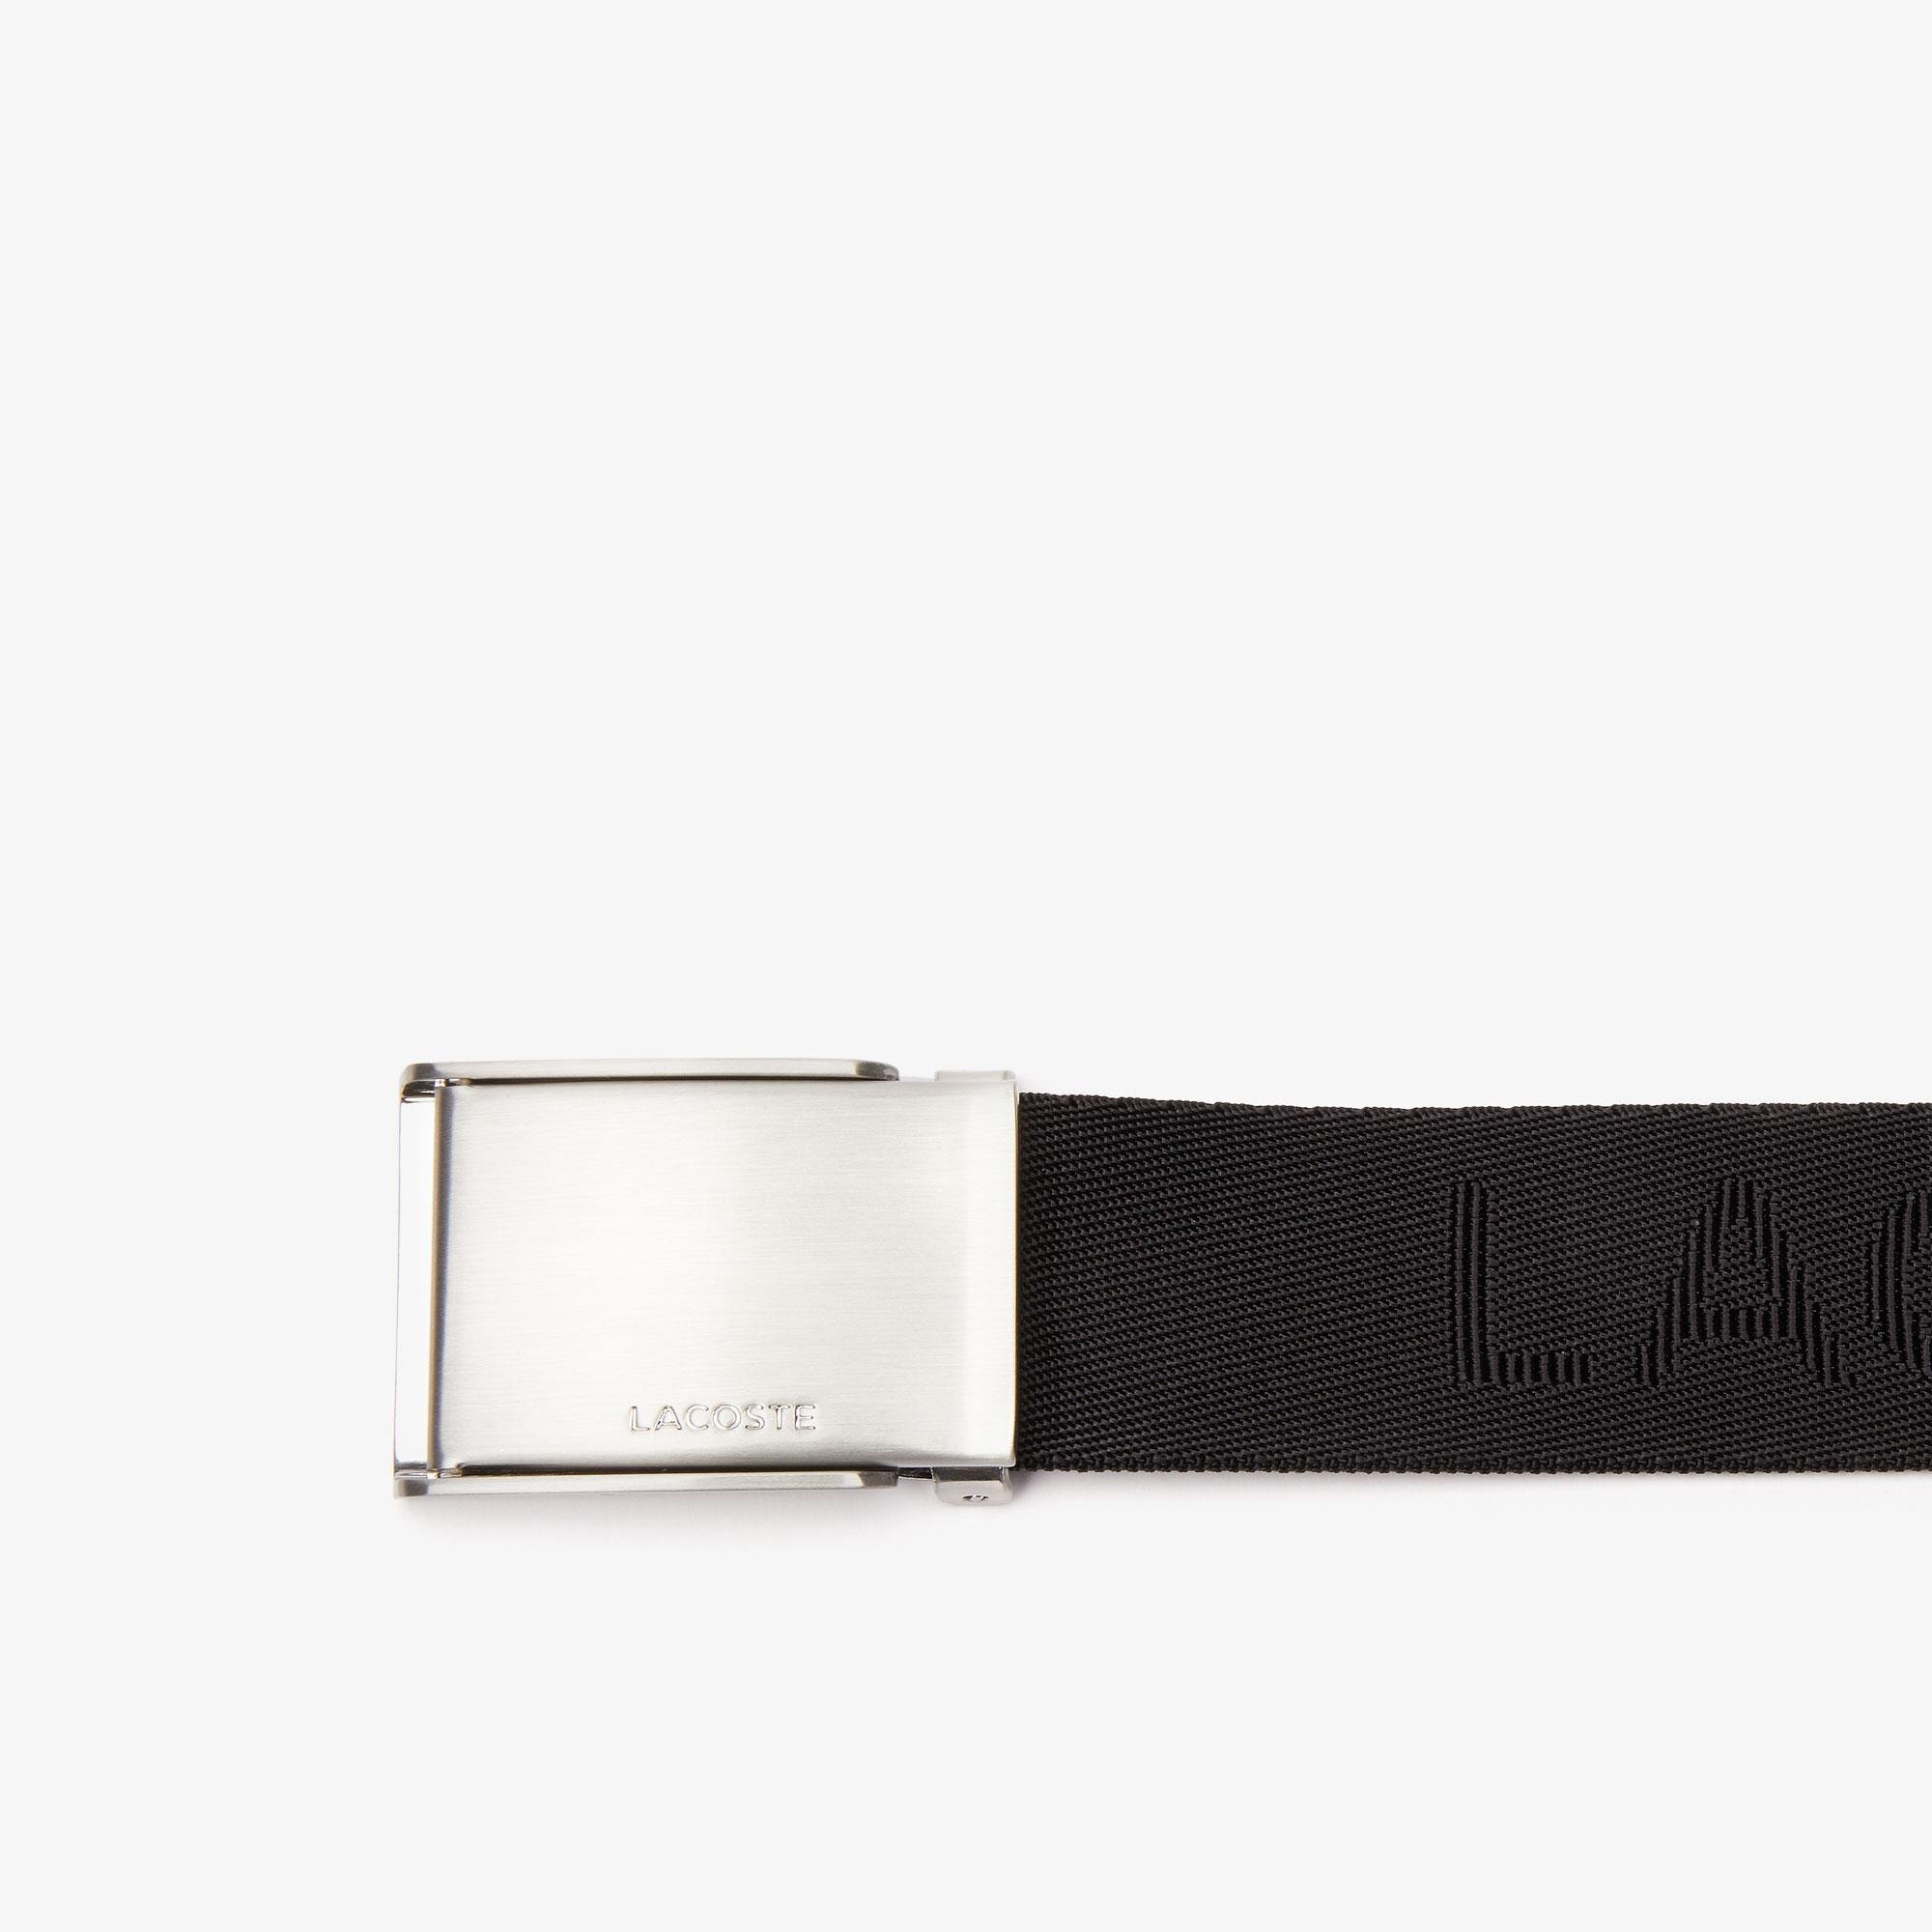 Lacoste Men's Embossed Two Woven Belts Gift Set